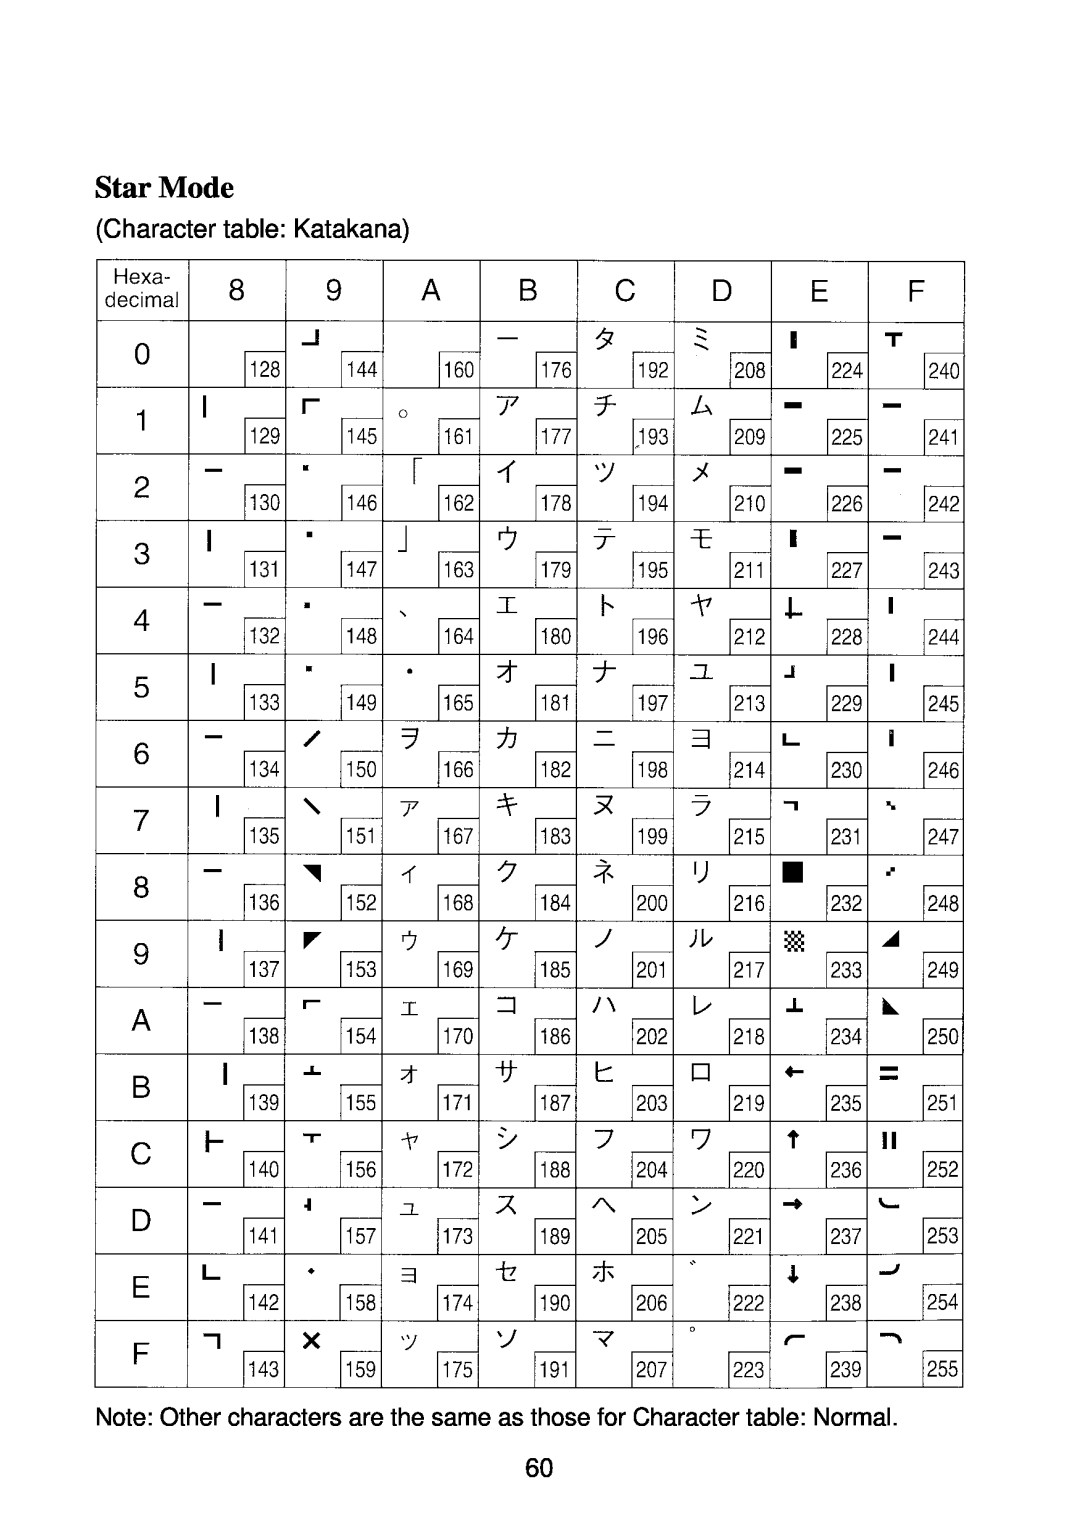 Star Micronics SP2000 manual Character table Katakana, Star Mode 